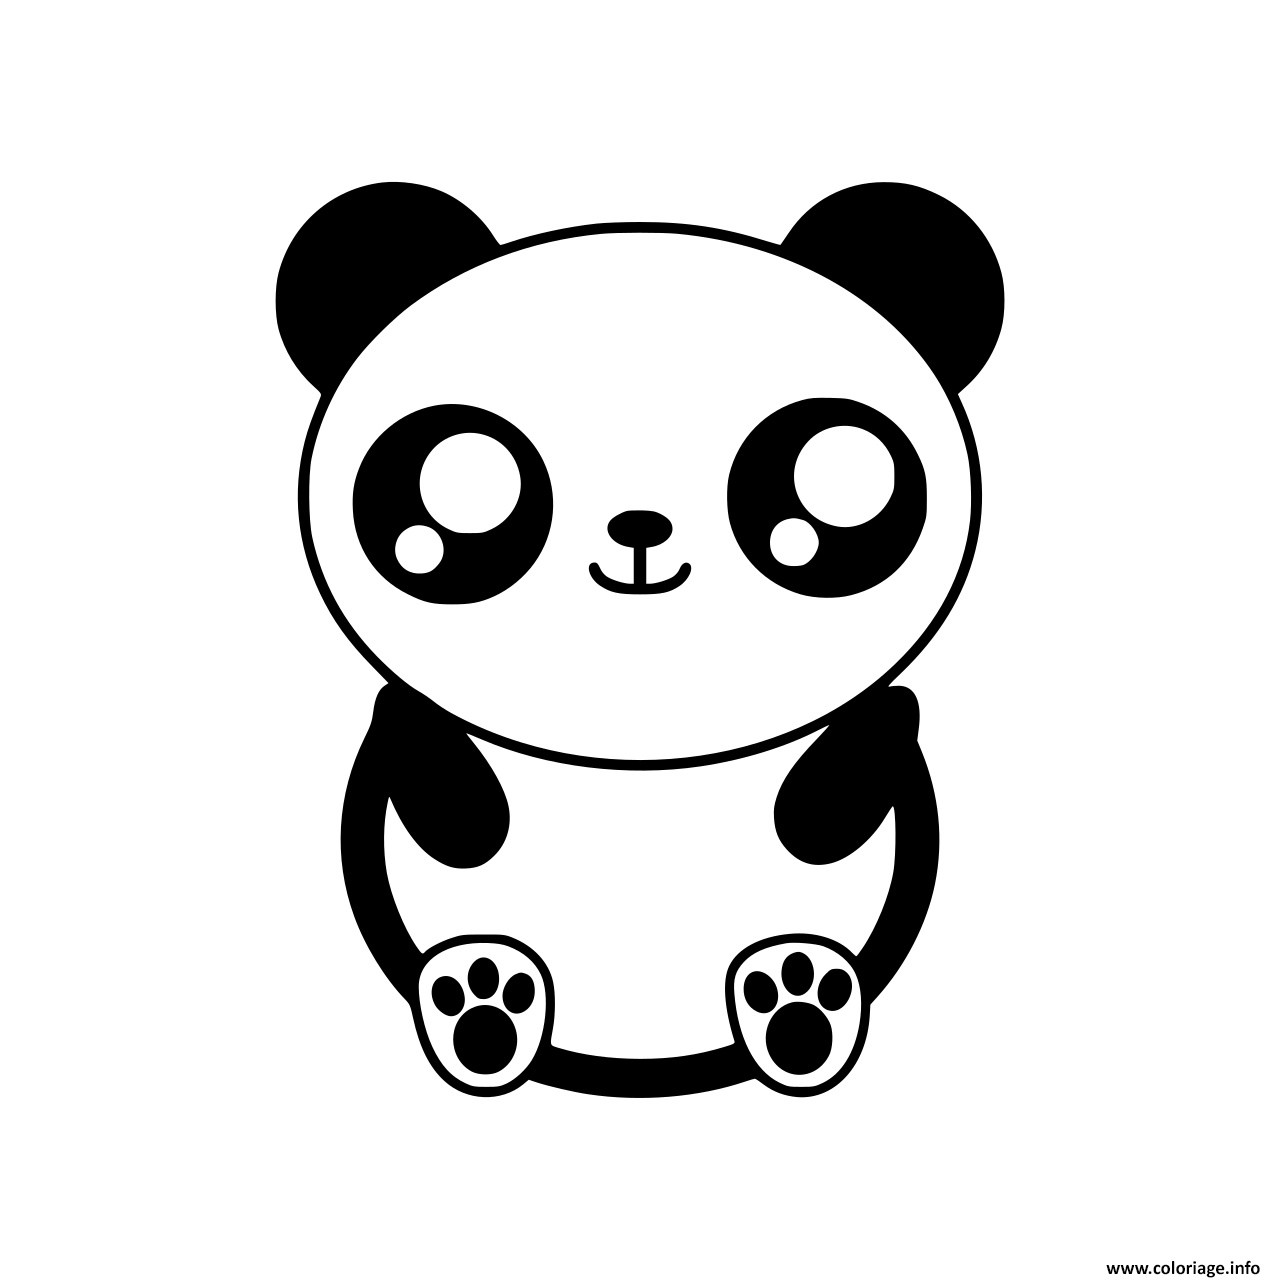 Coloriage Kawaii Panda Dessin Kawaii À Imprimer destiné Dessin Panda À Colorier